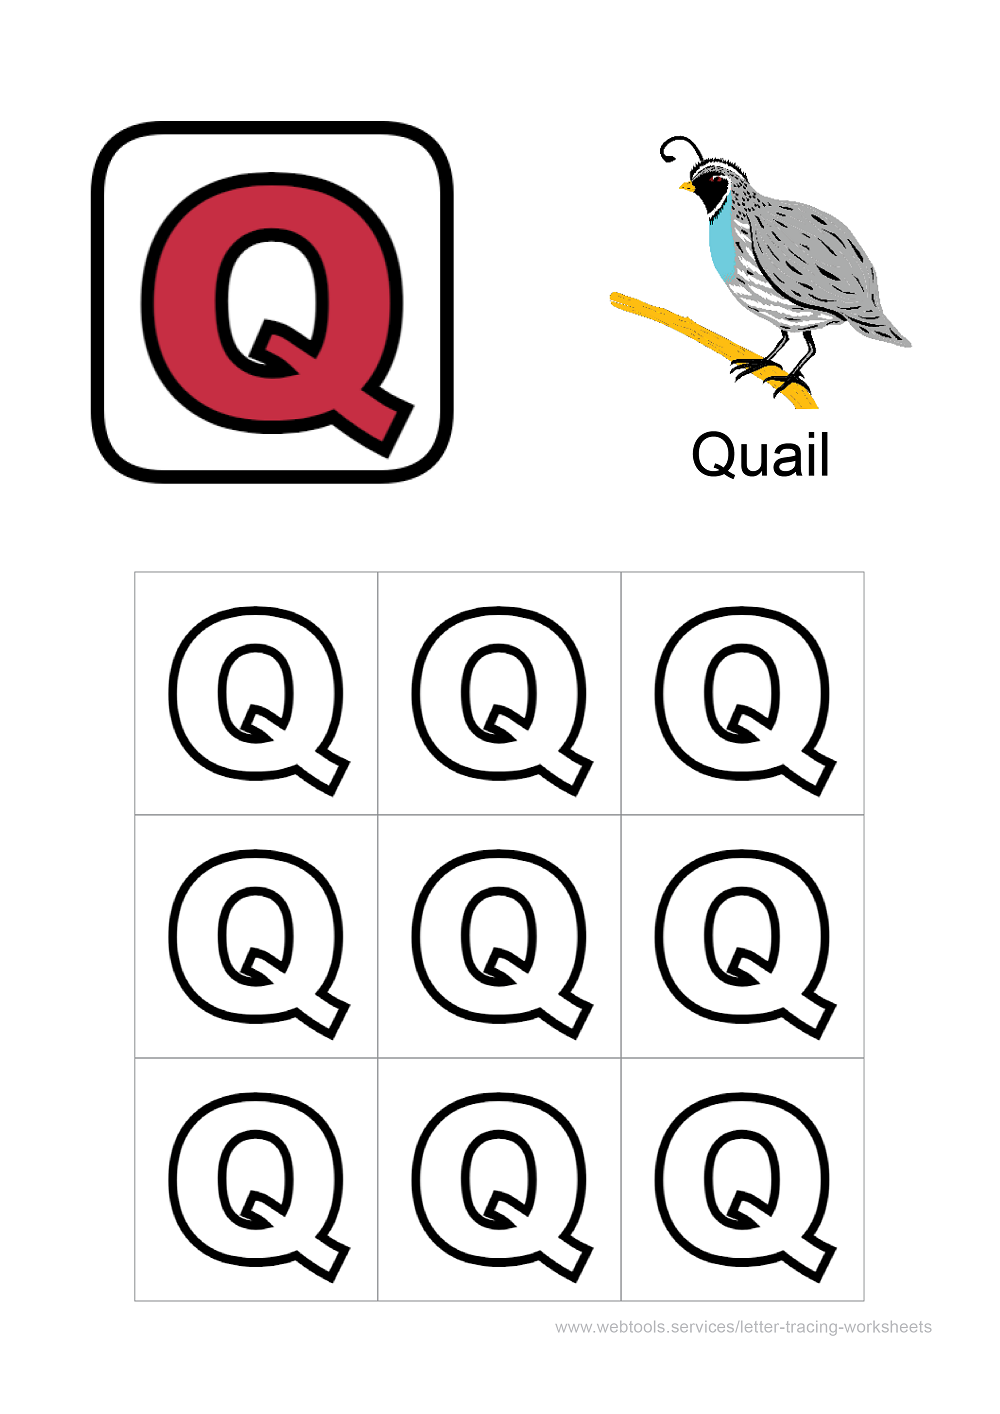 Letter 'Q' Coloring Sheet PDF